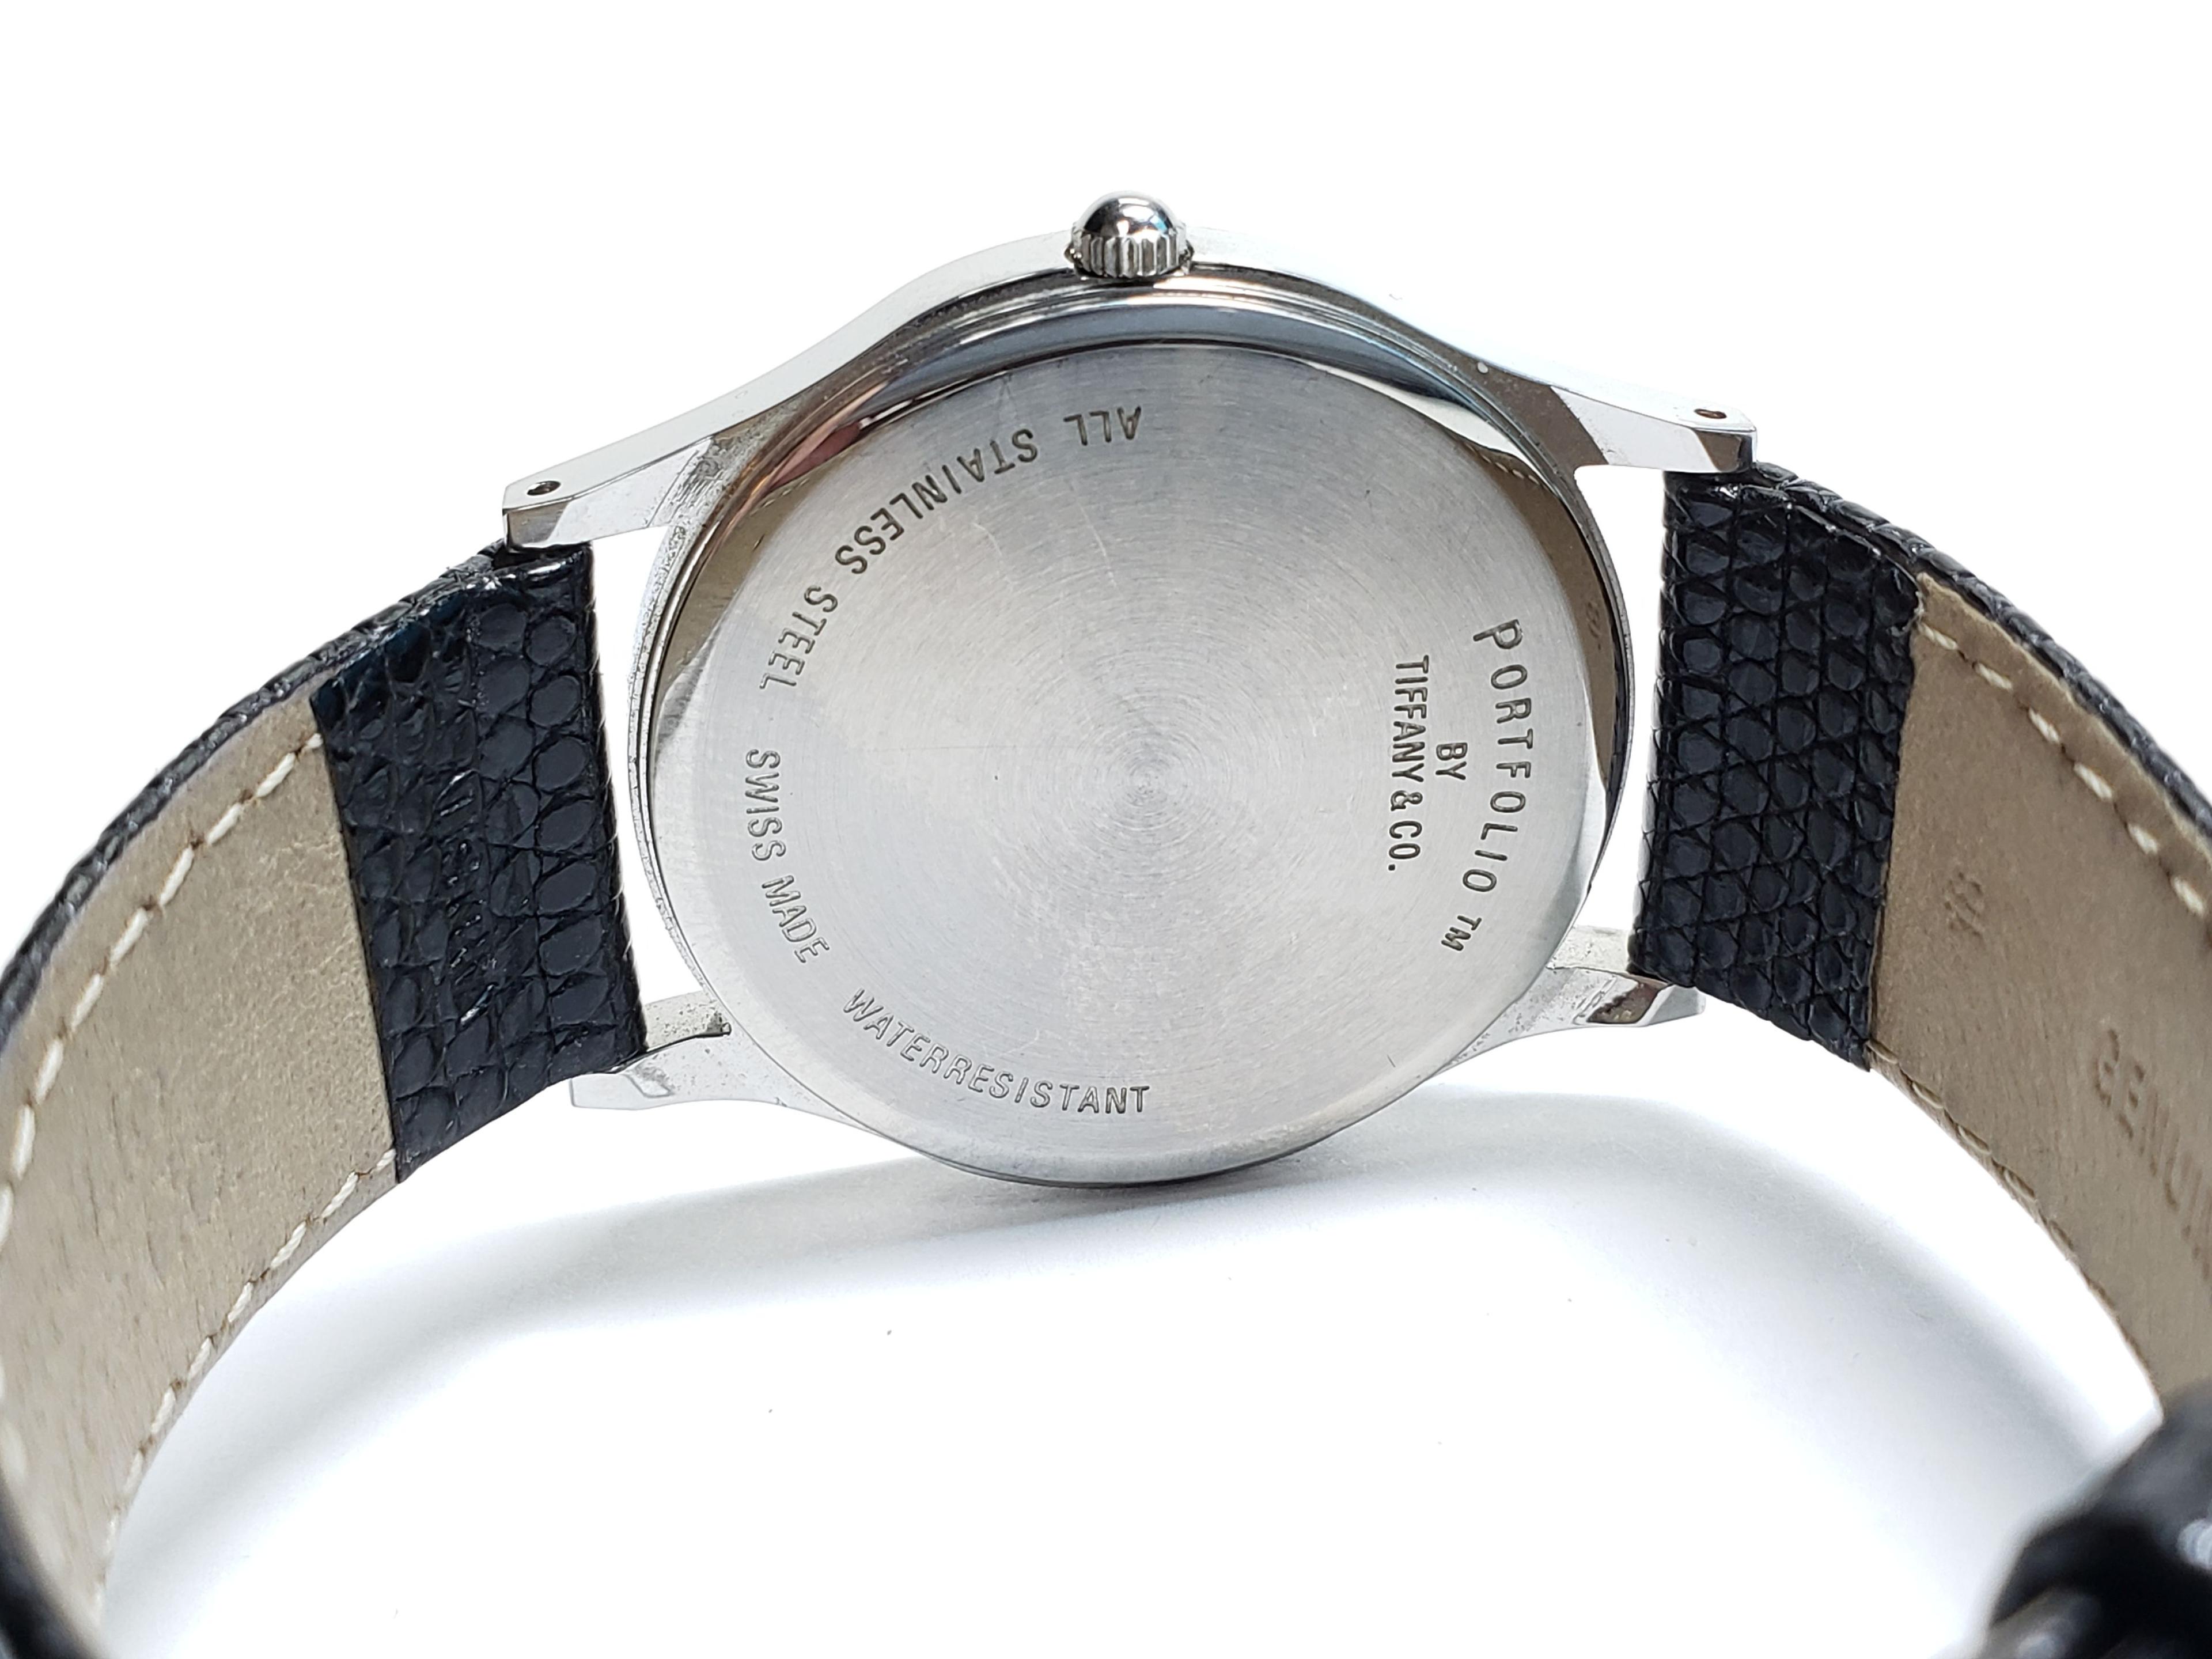 Stunning Tiffany & Co. Portfolio St. Steel Quartz Watch with Box